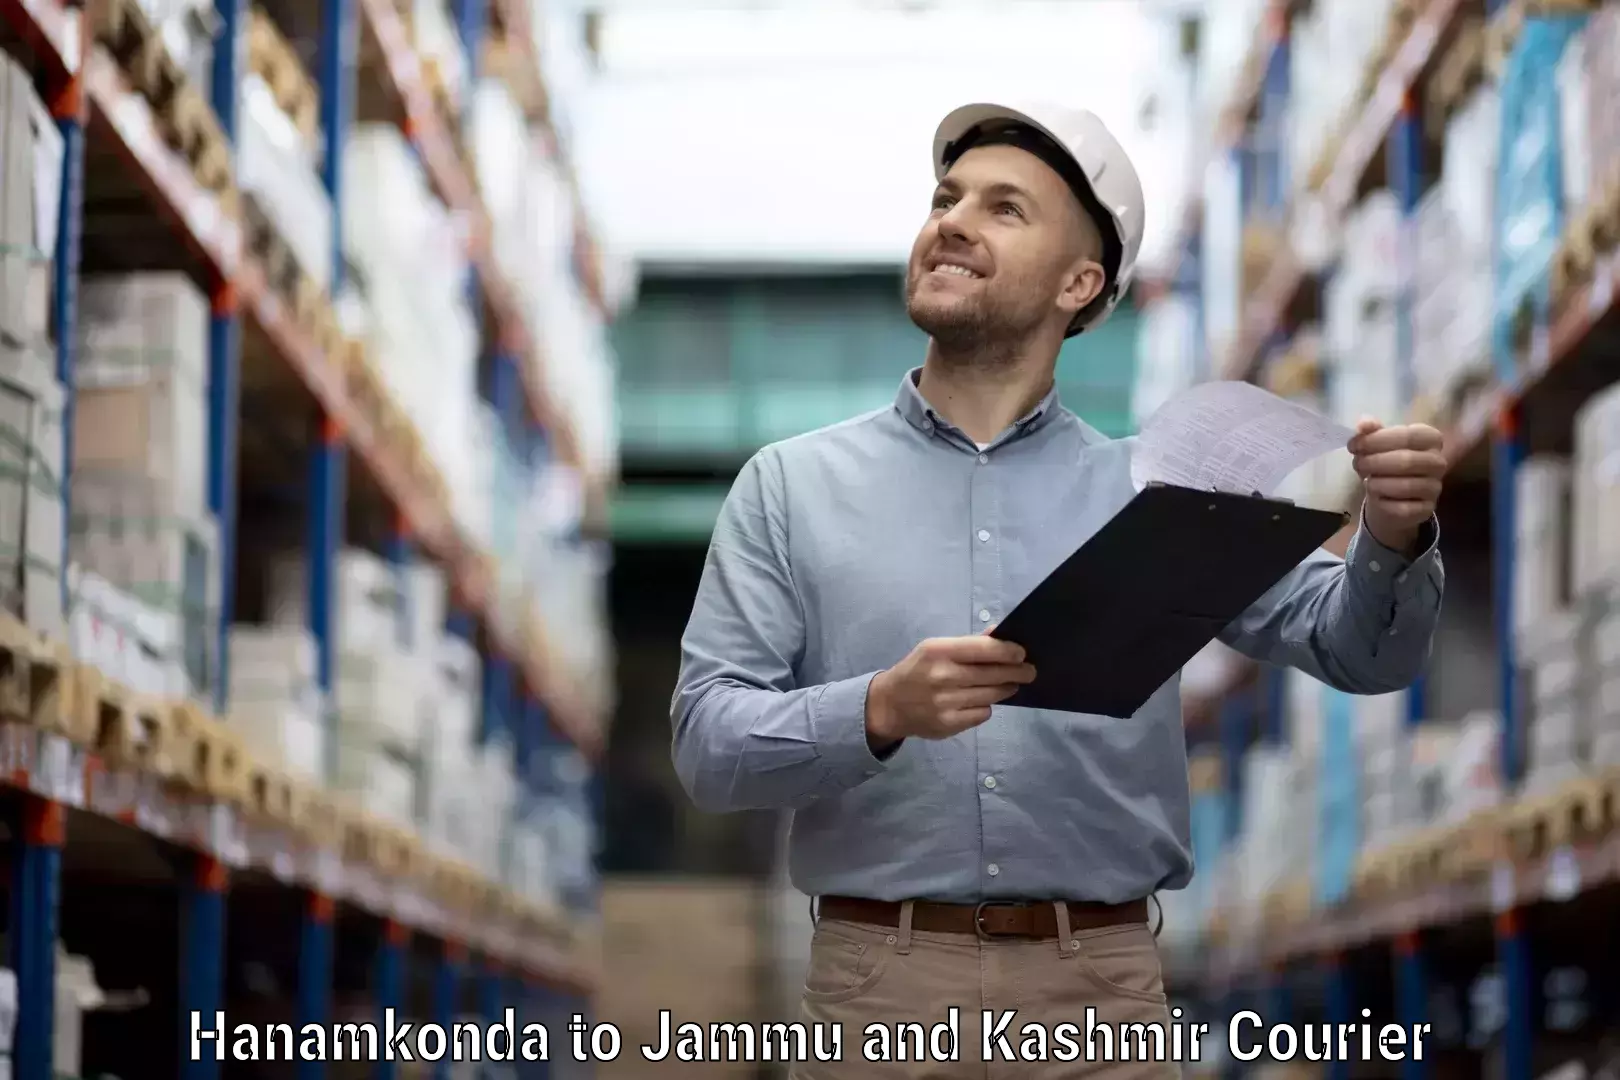 Business delivery service Hanamkonda to Jammu and Kashmir